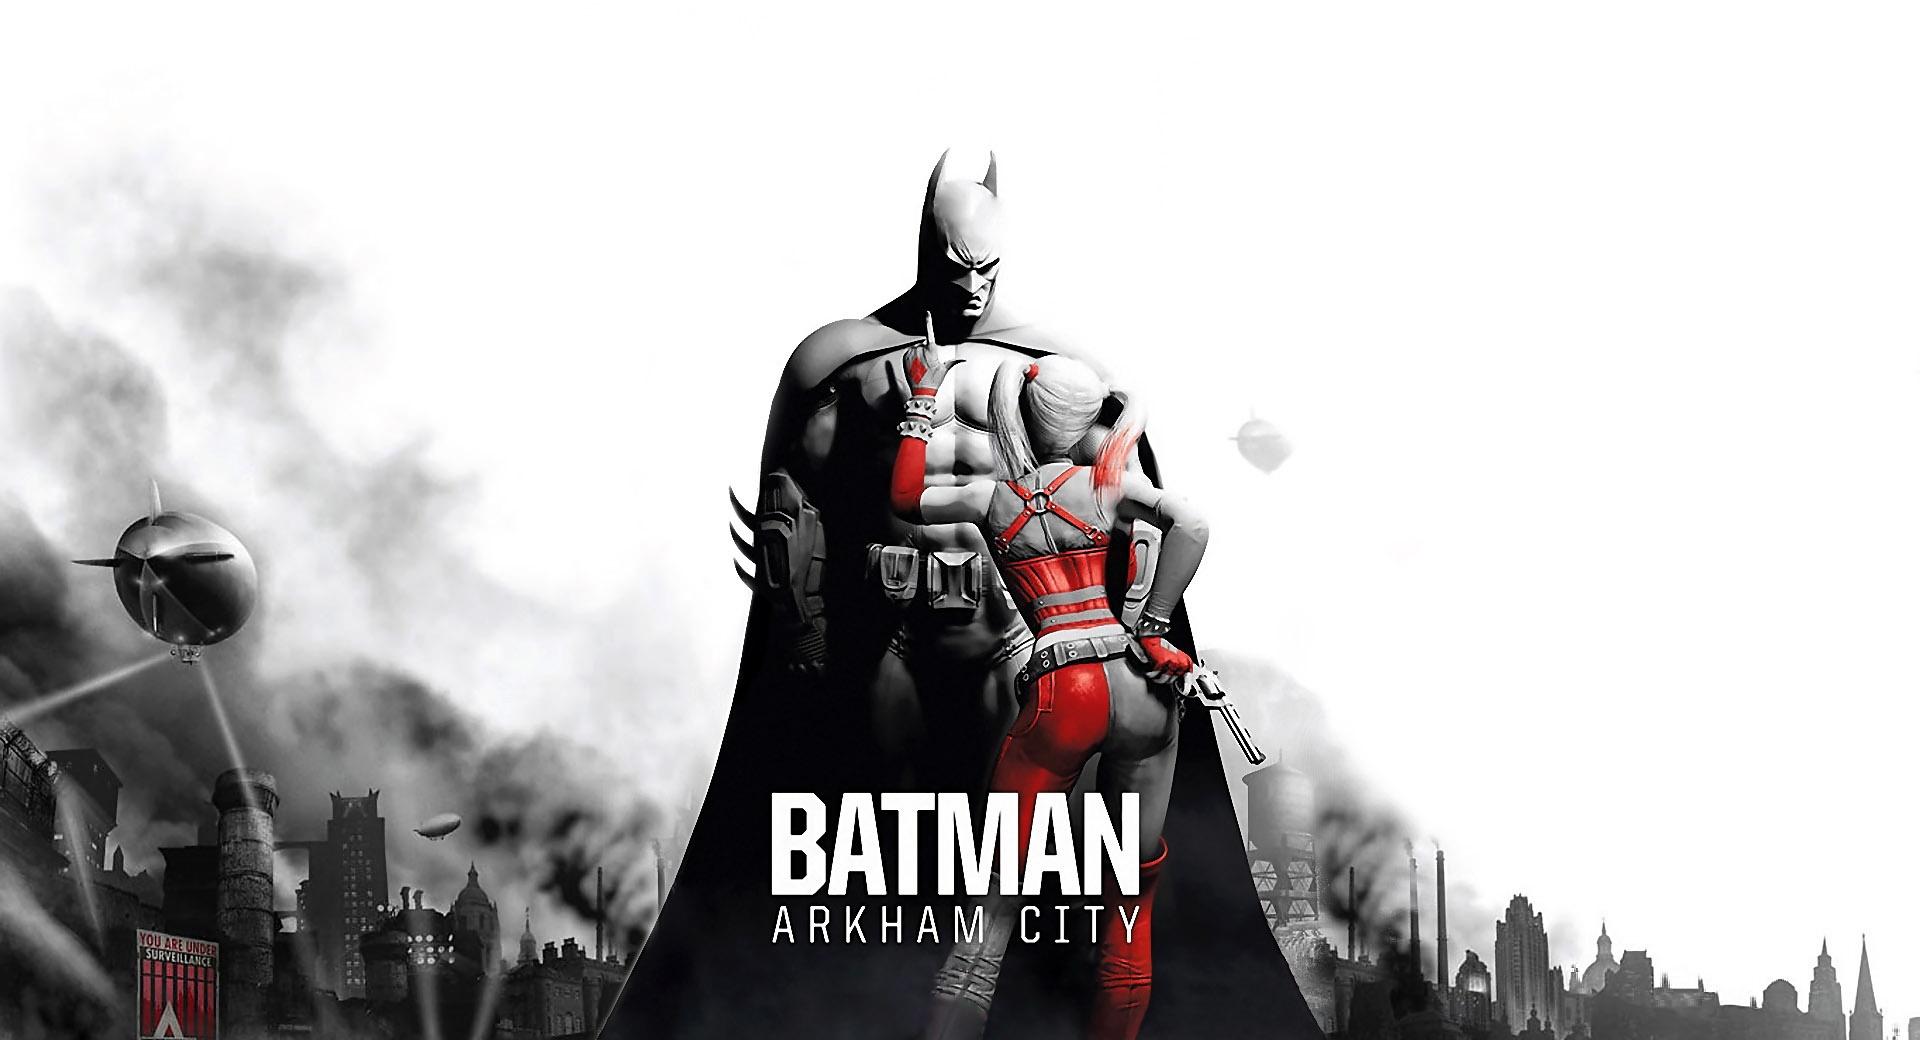 Batman Arkham City - Batman Harley at 1024 x 1024 iPad size wallpapers HD quality